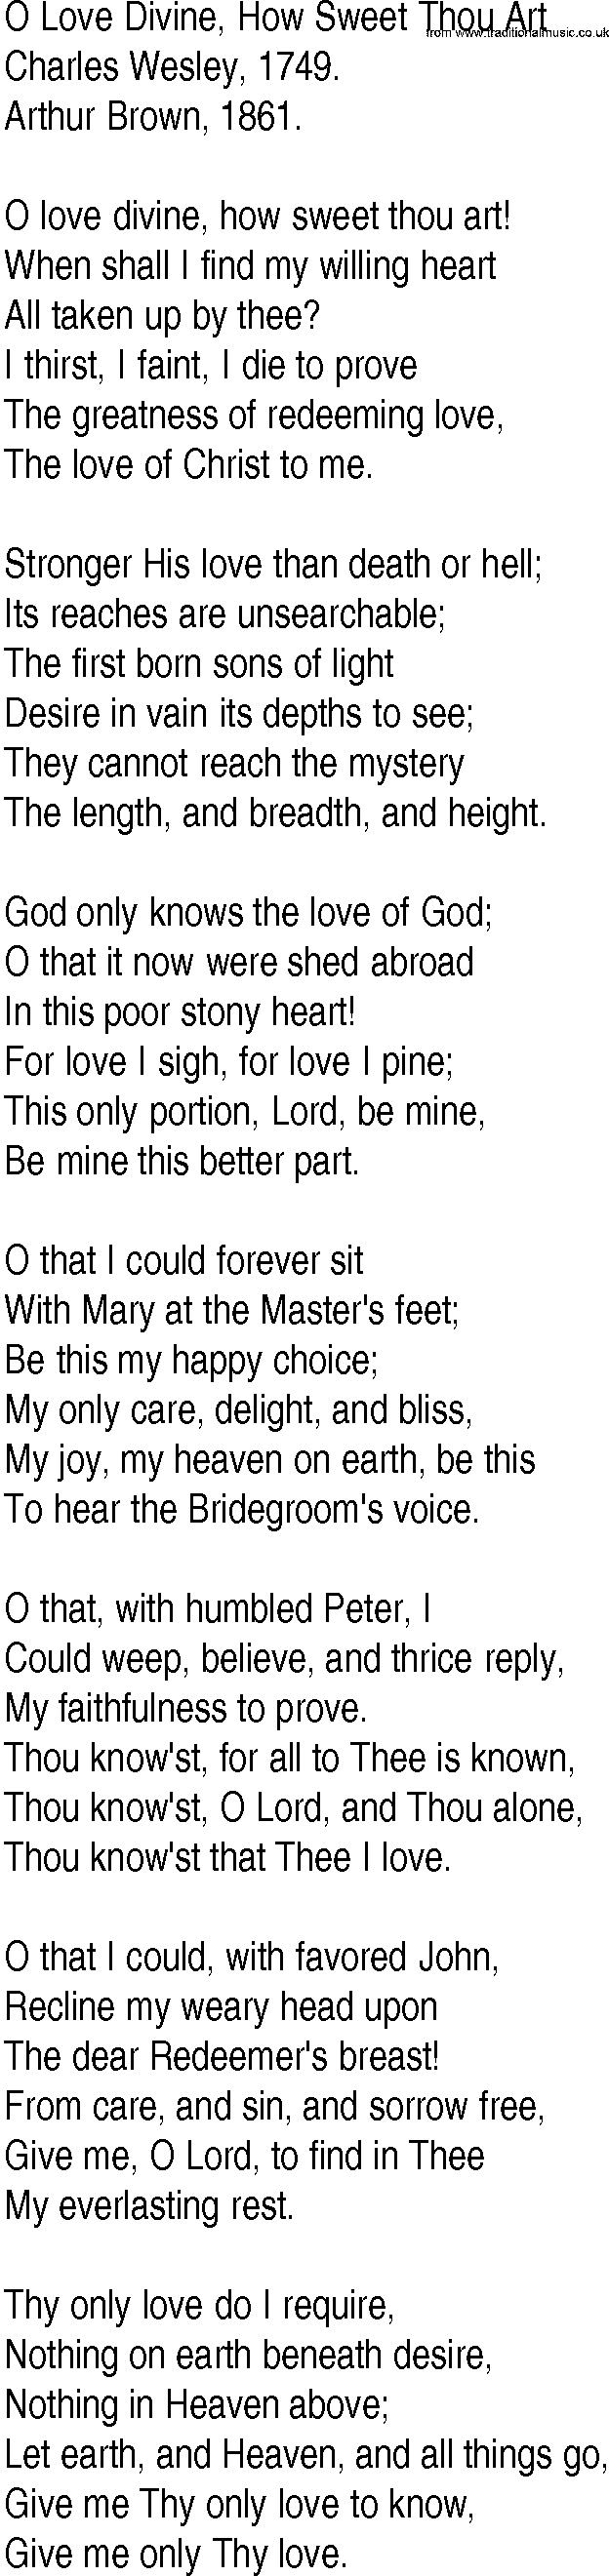 Hymn and Gospel Song: O Love Divine, How Sweet Thou Art by Charles Wesley lyrics